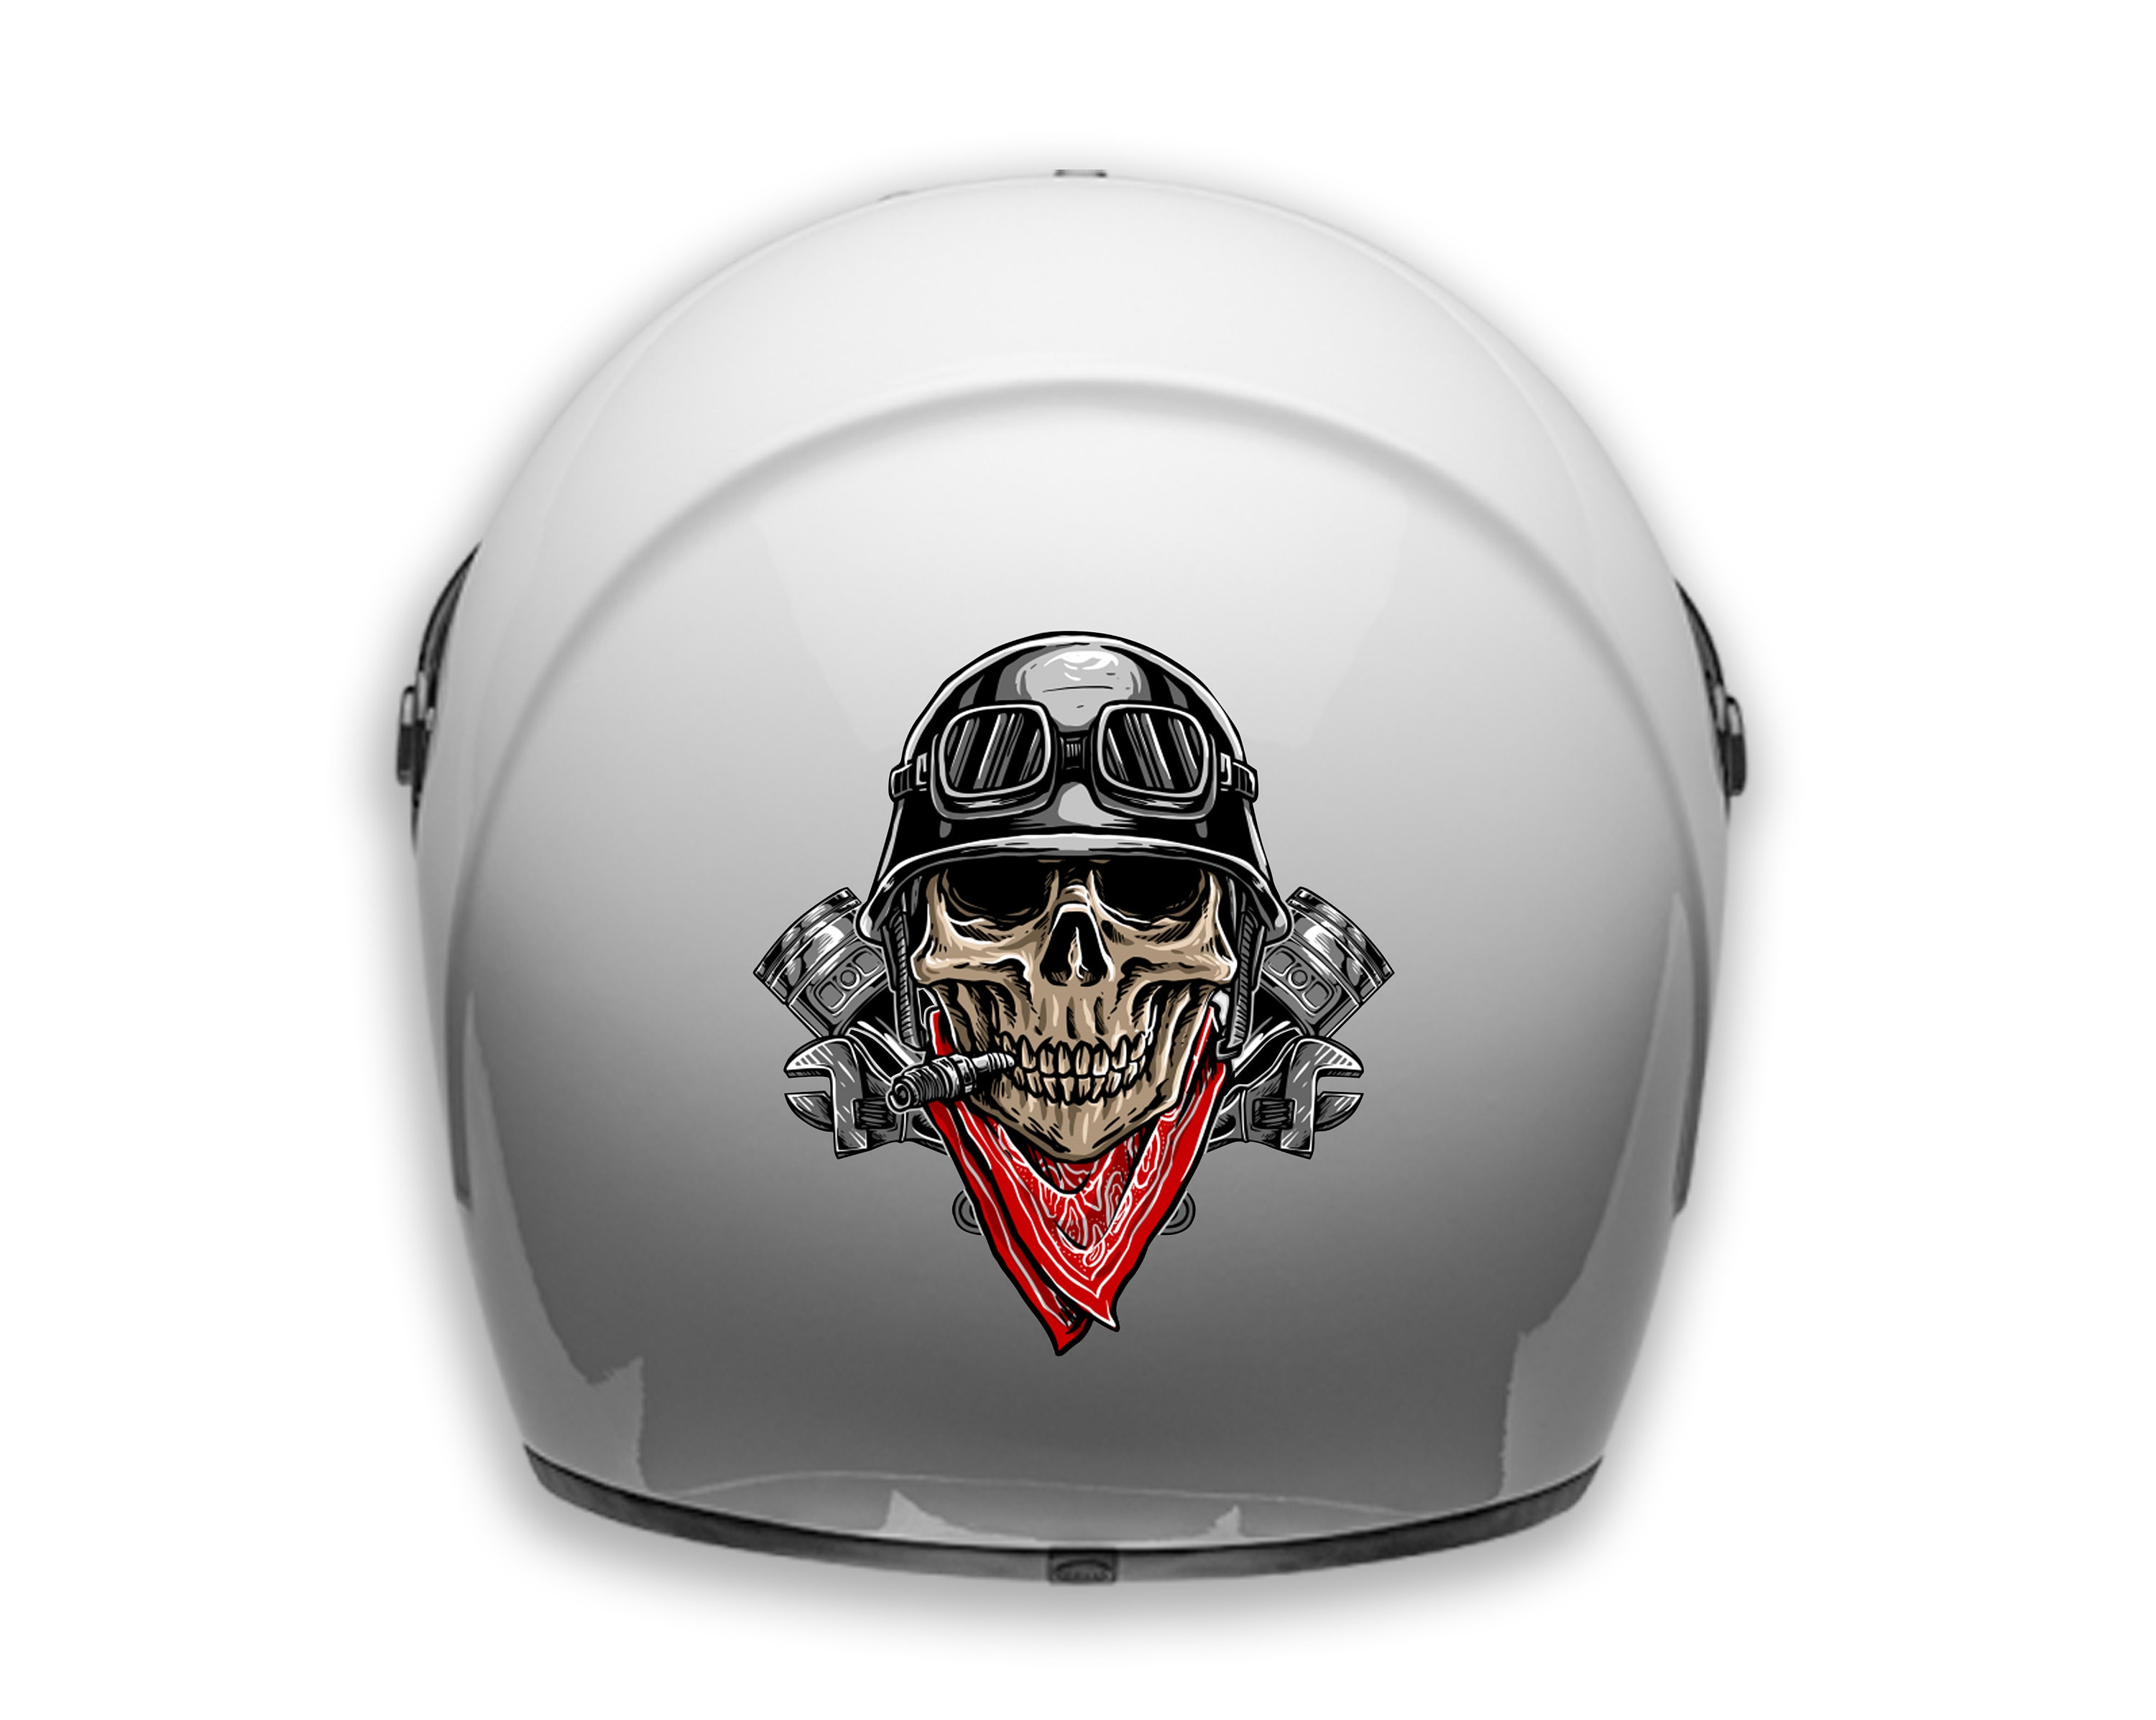 Skull Helmet Art, Motorcycle helmet, cool helmet stickers, motorcycle  helmet stickers, helmet stickers, Sticker for Sale by thesmokeydogs